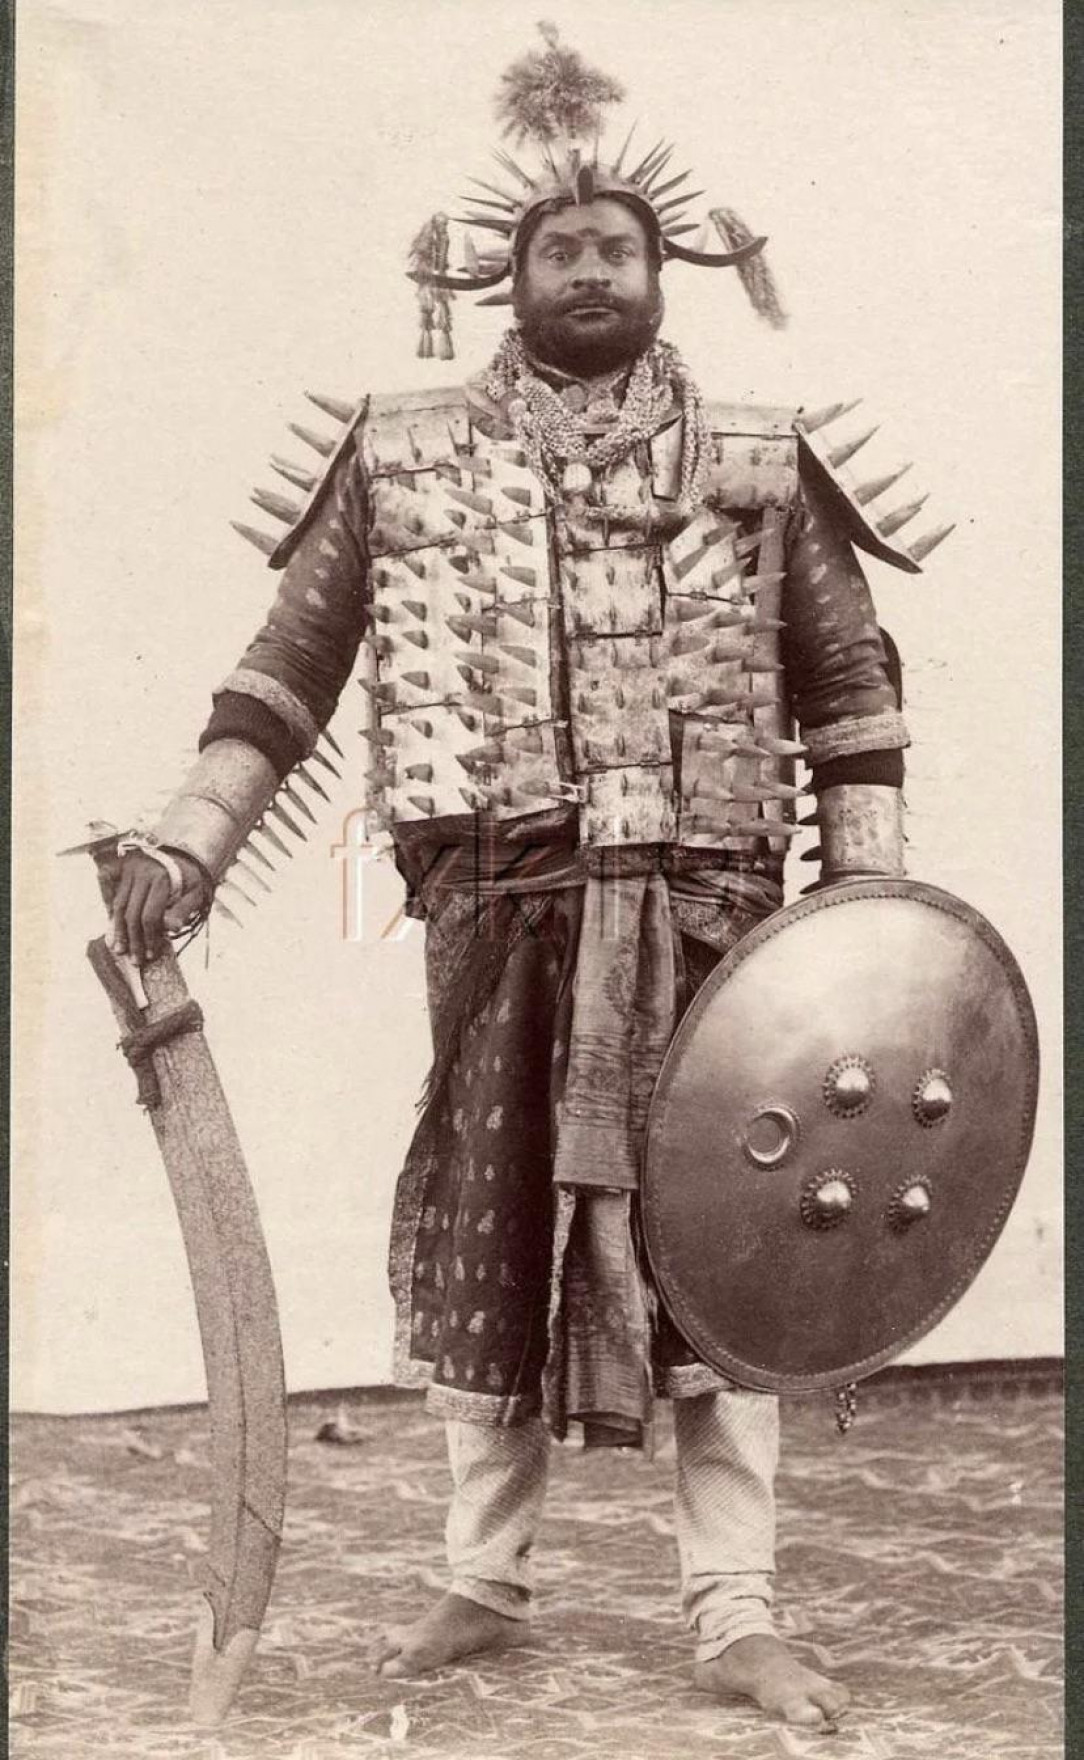 An Indian executioner